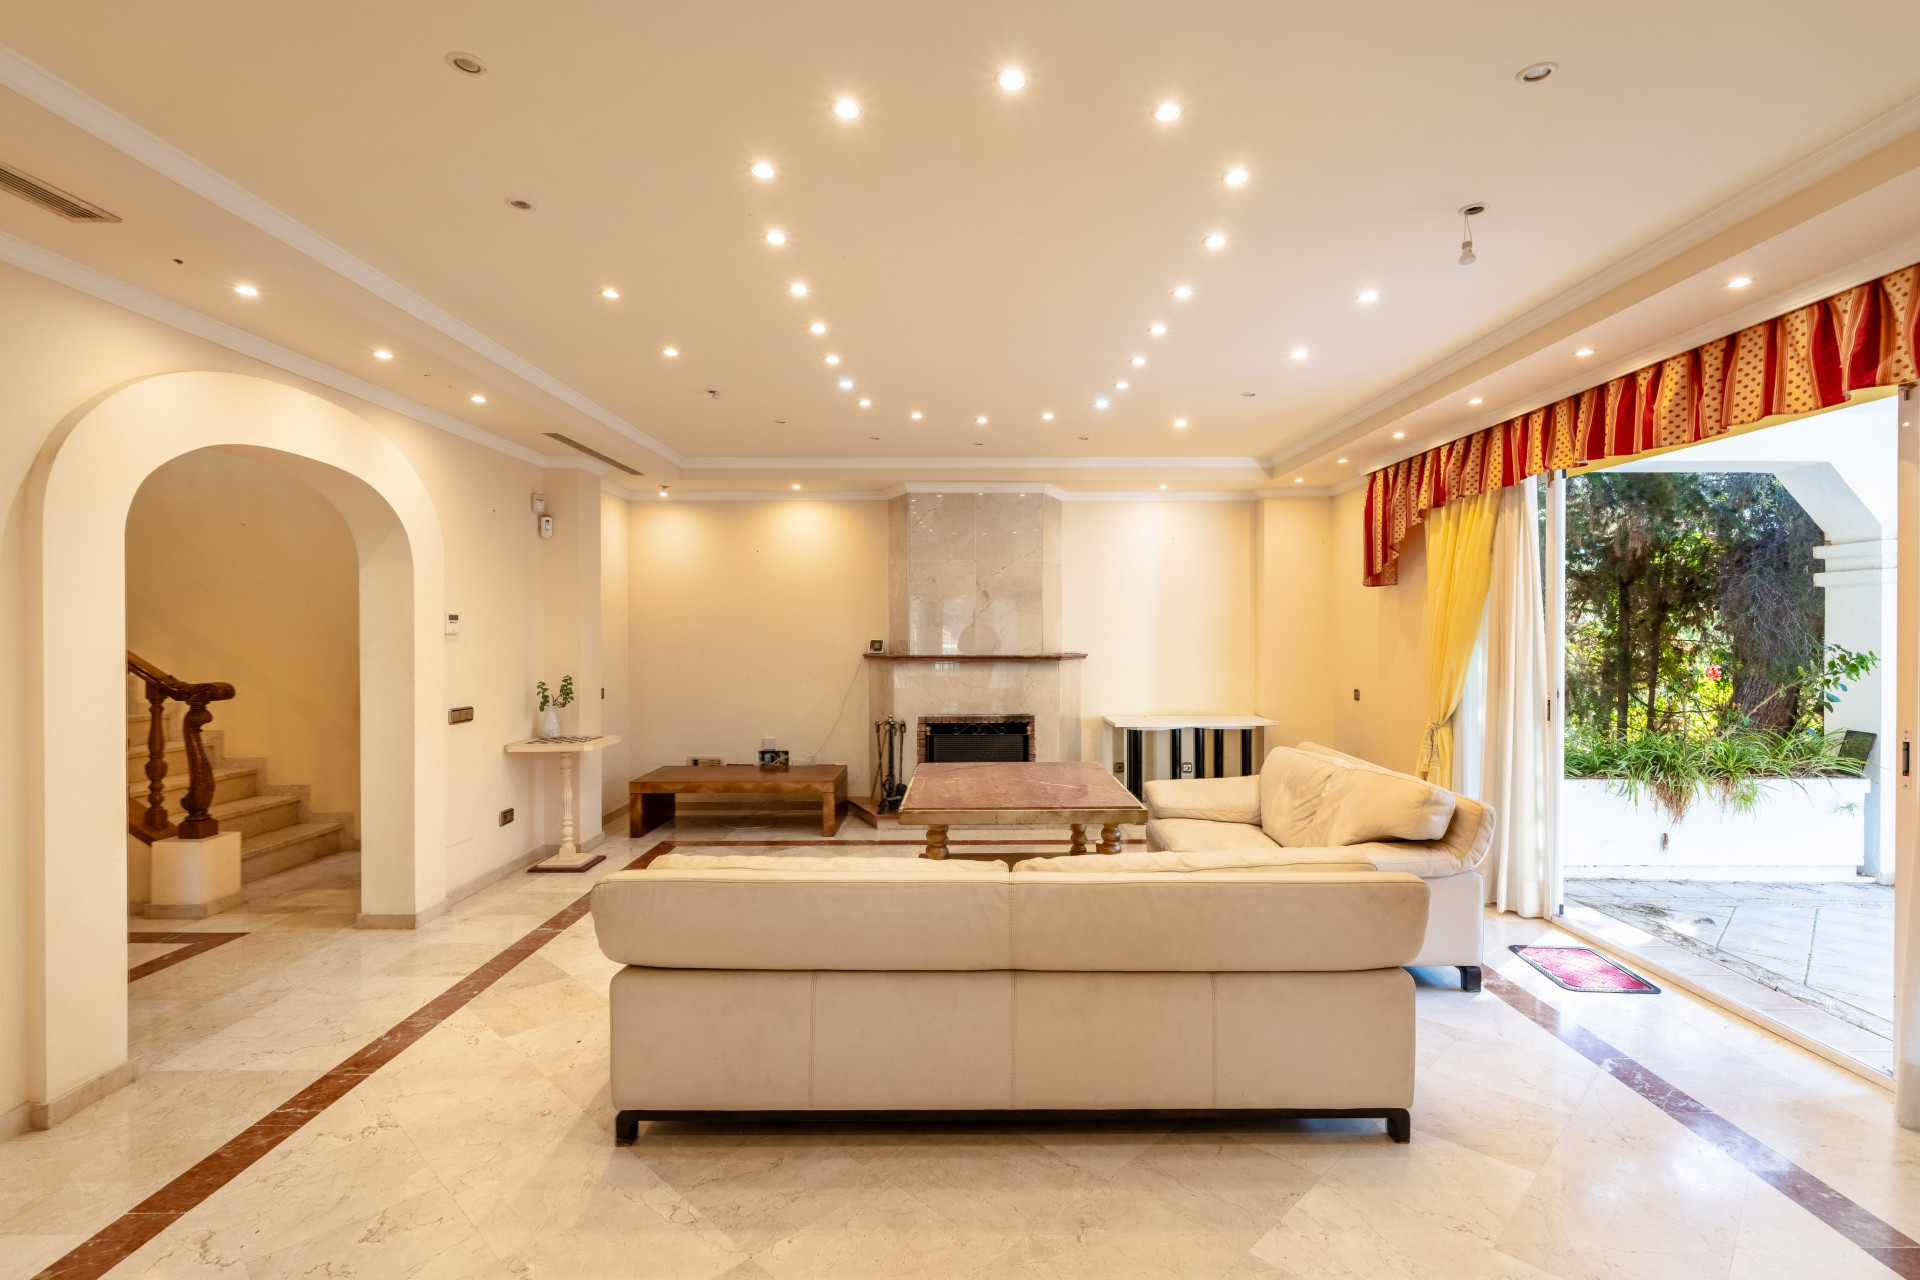 Charming Mediterranean-style 4-bedroom villa in the in prestigious area of Paraiso Alto